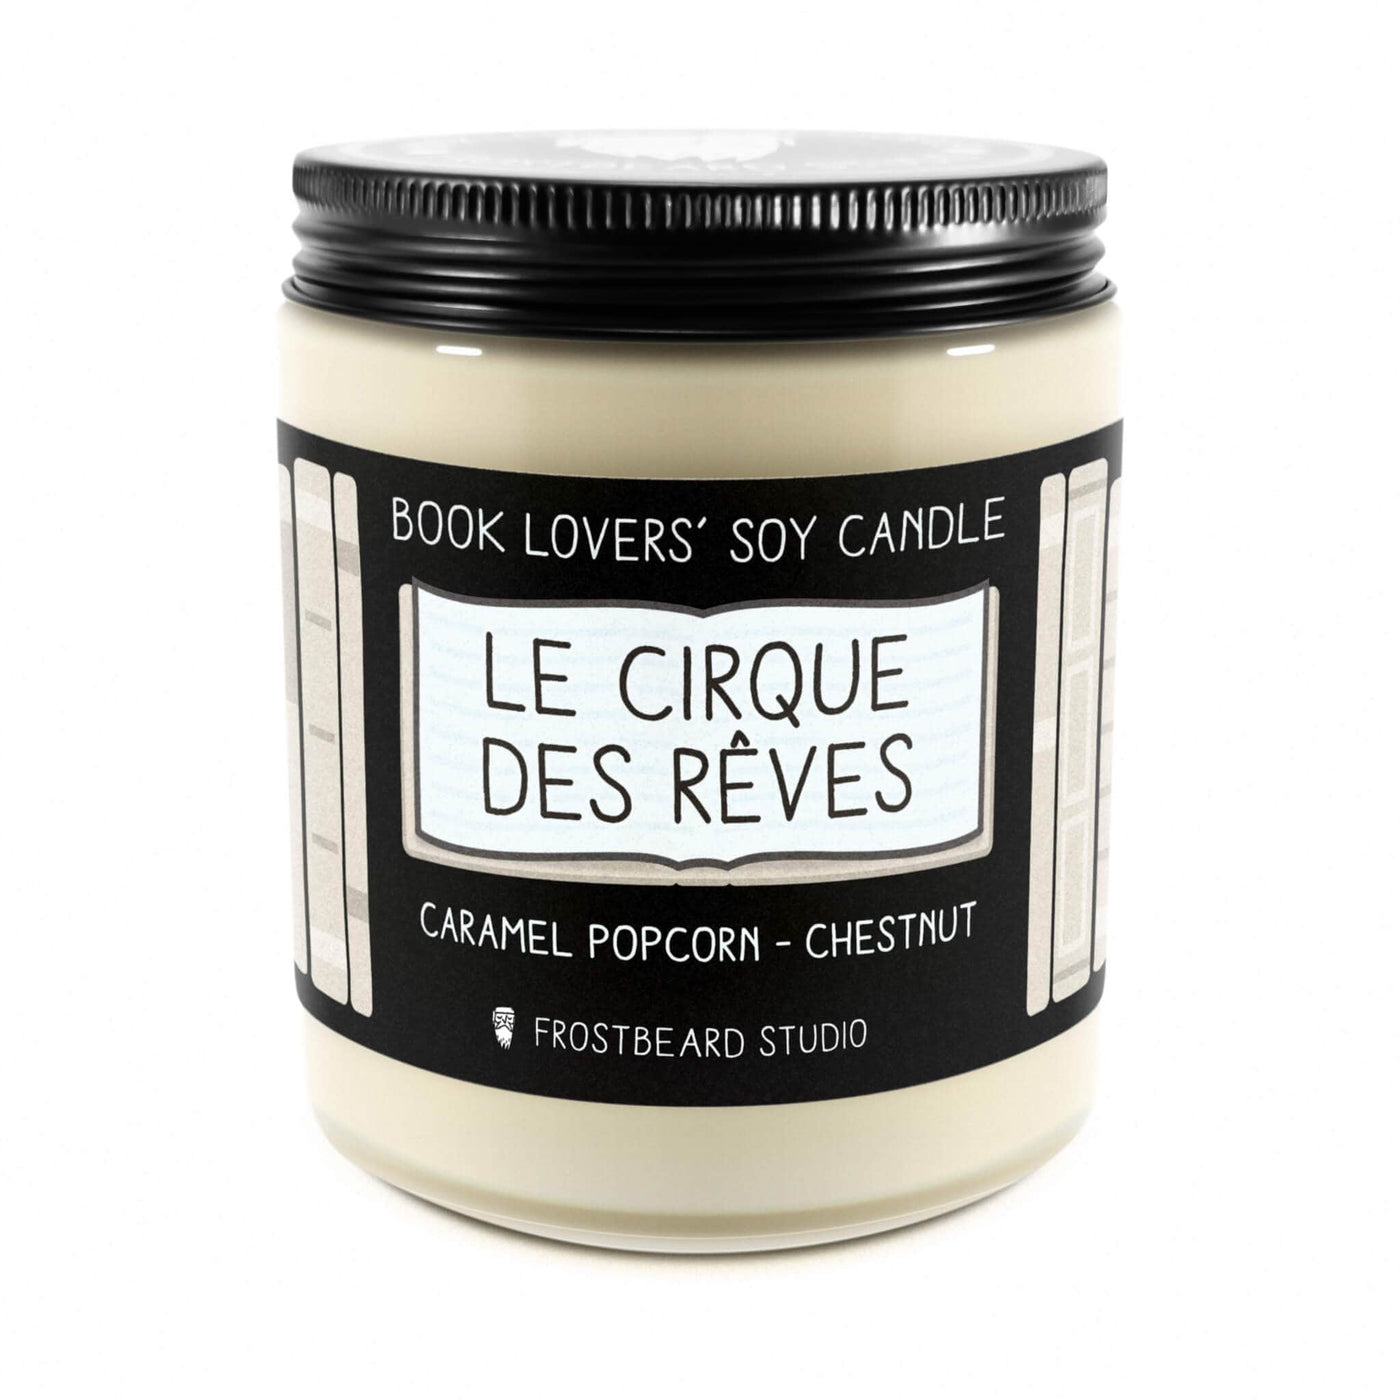 Le Cirque des Rêves - 8 oz Jar - Book Lovers' Soy Candle - Frostbeard Studio